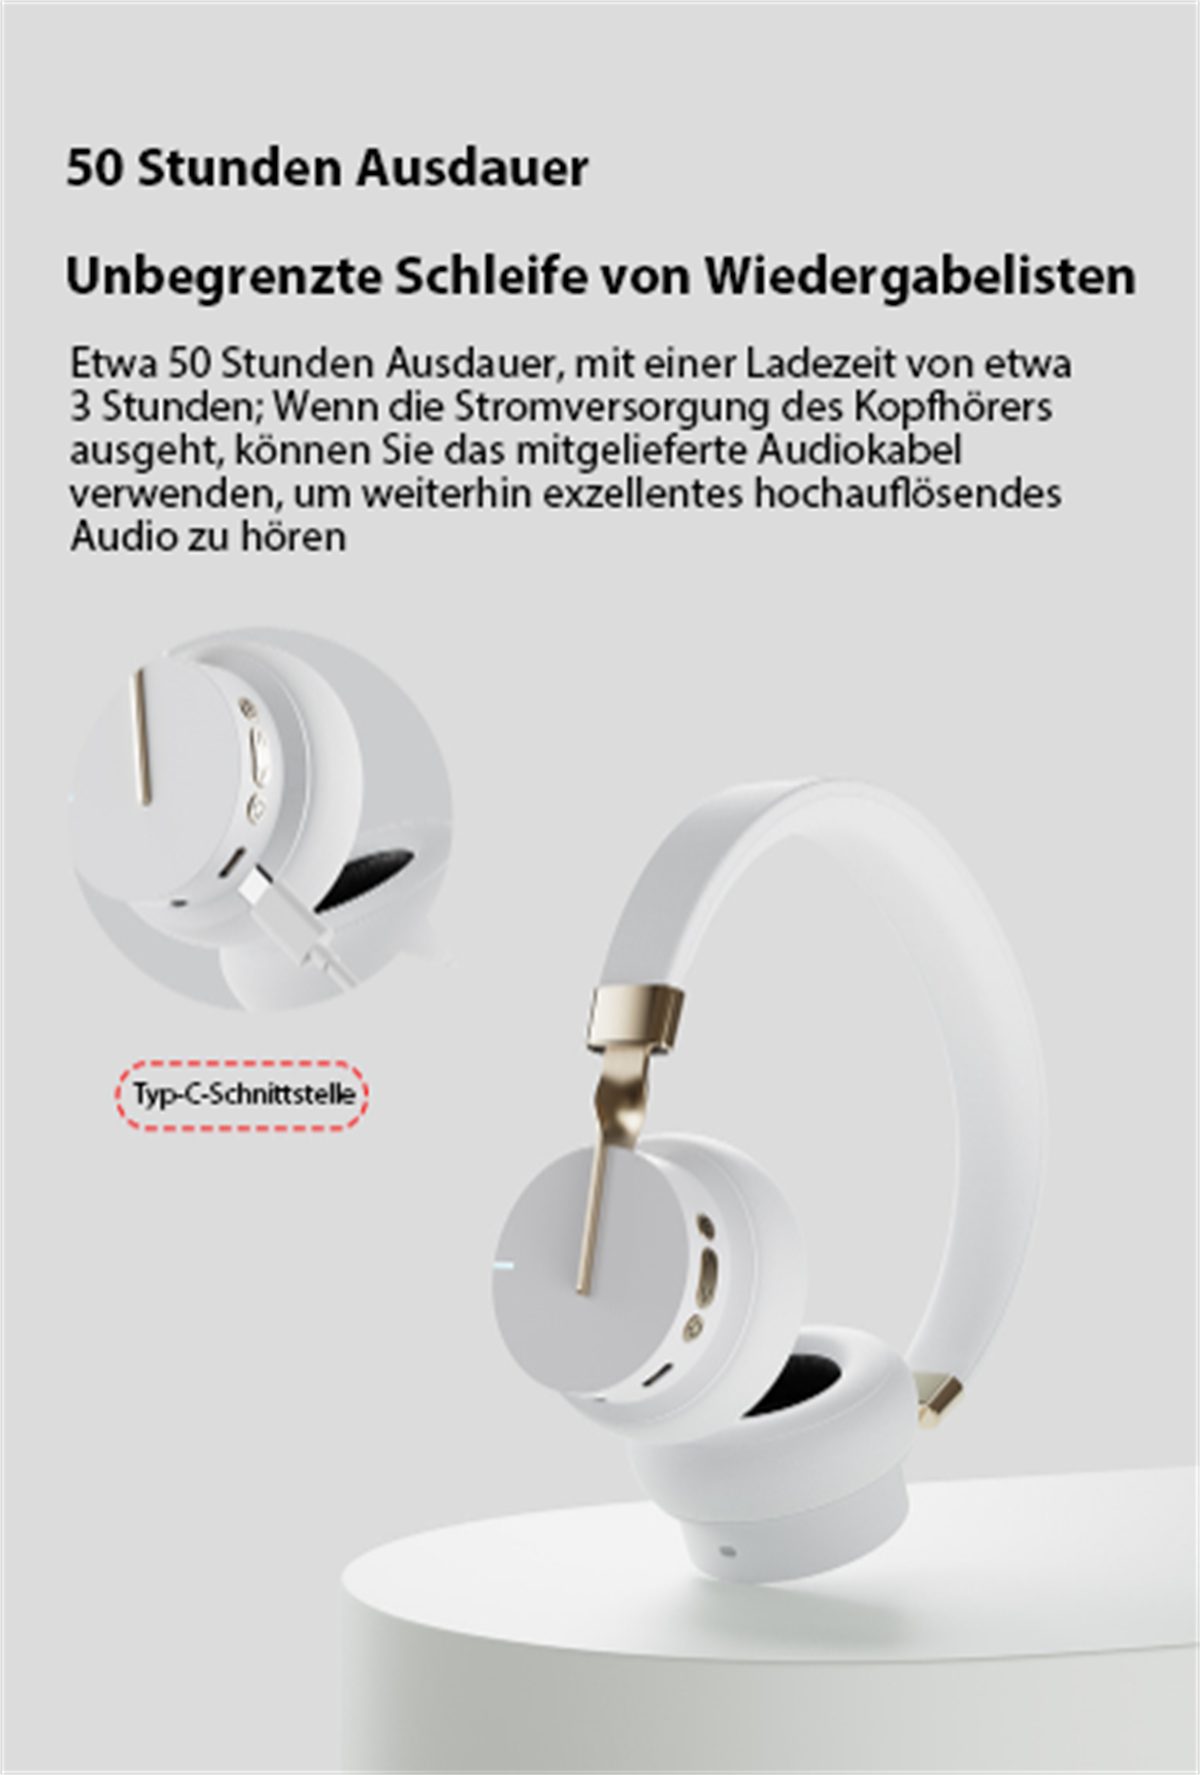 Stunden lange Over-Ear-Kopfhörer 50 carefully Bluetooth-Headset, Kabelloses Akkulaufzeit Schwarz Headset, selected